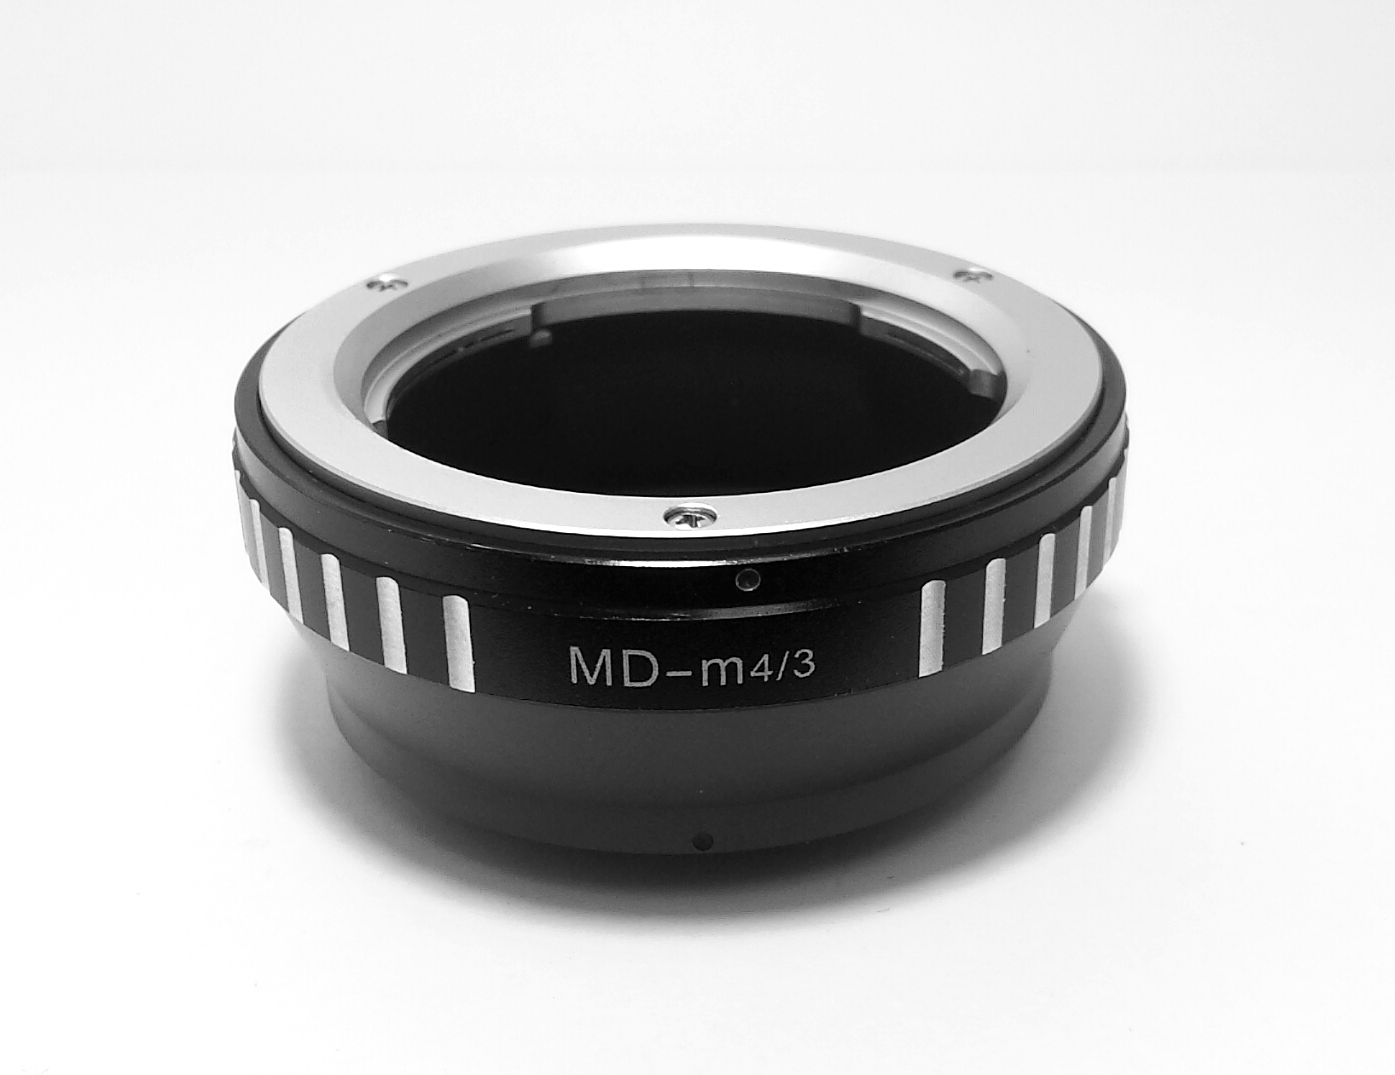 Minolta MD Lens to Mirco 4/3 Camera Body